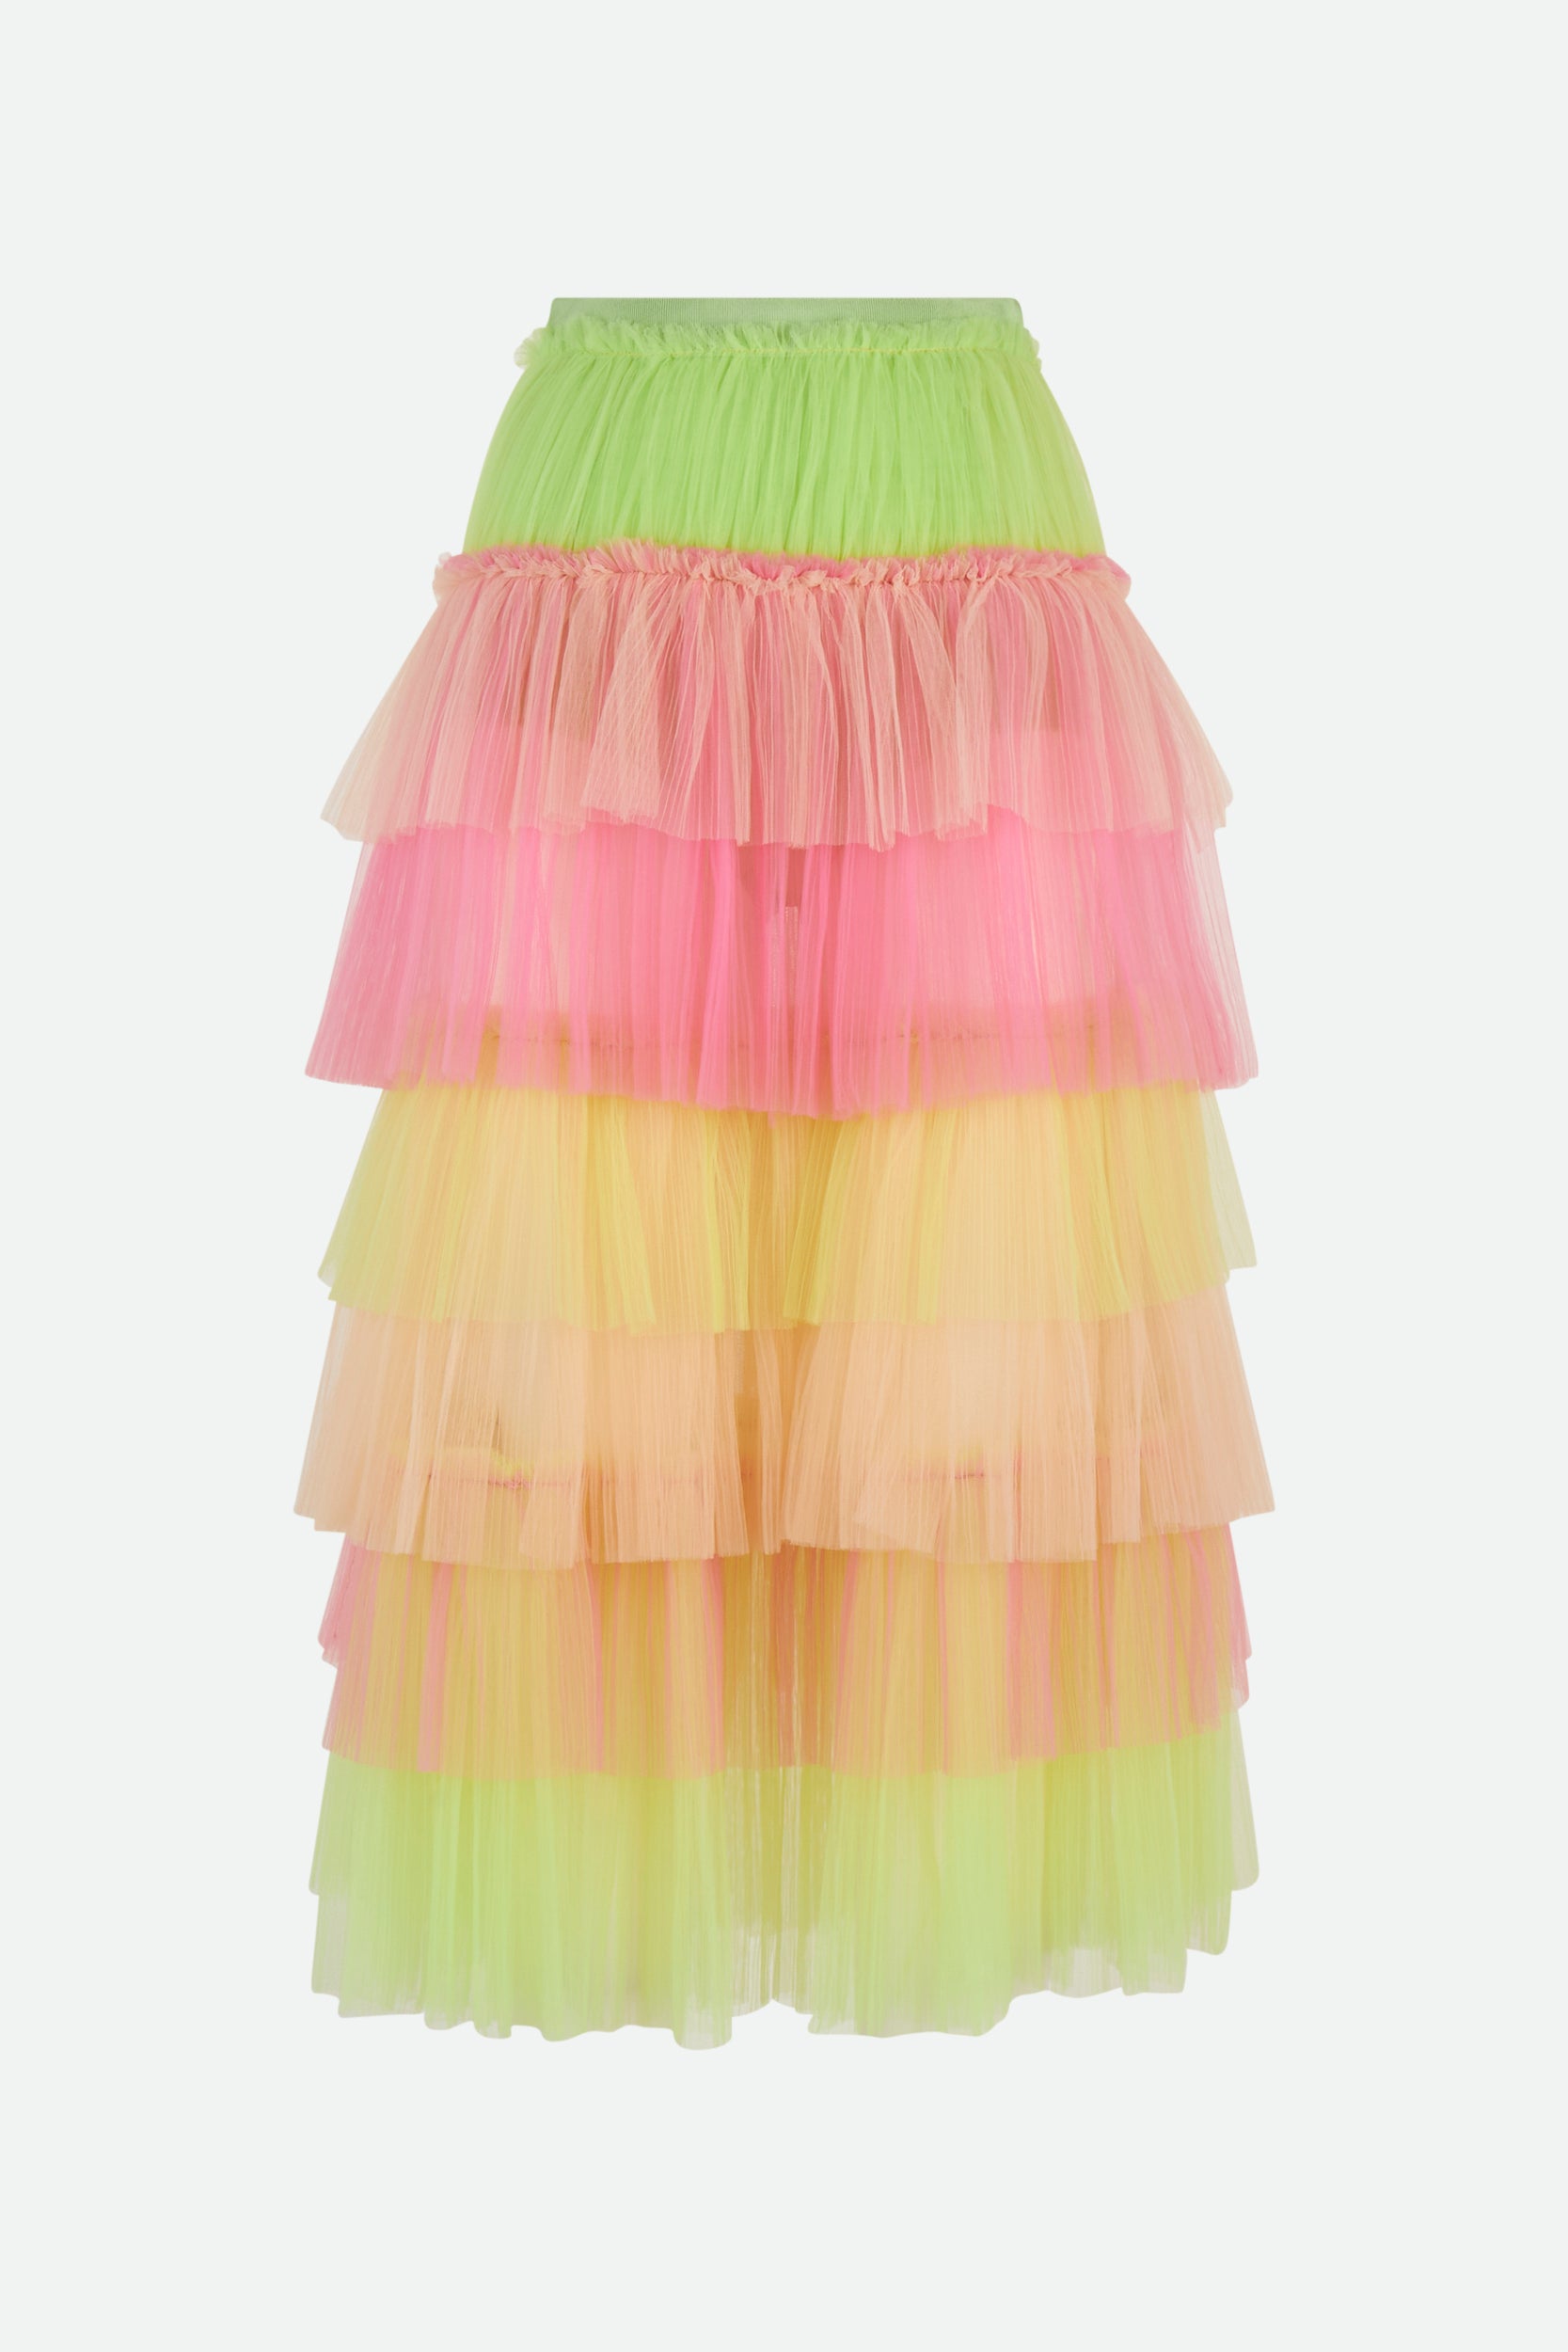 Elisabetta Franchi Multicolored Tulle Skirt